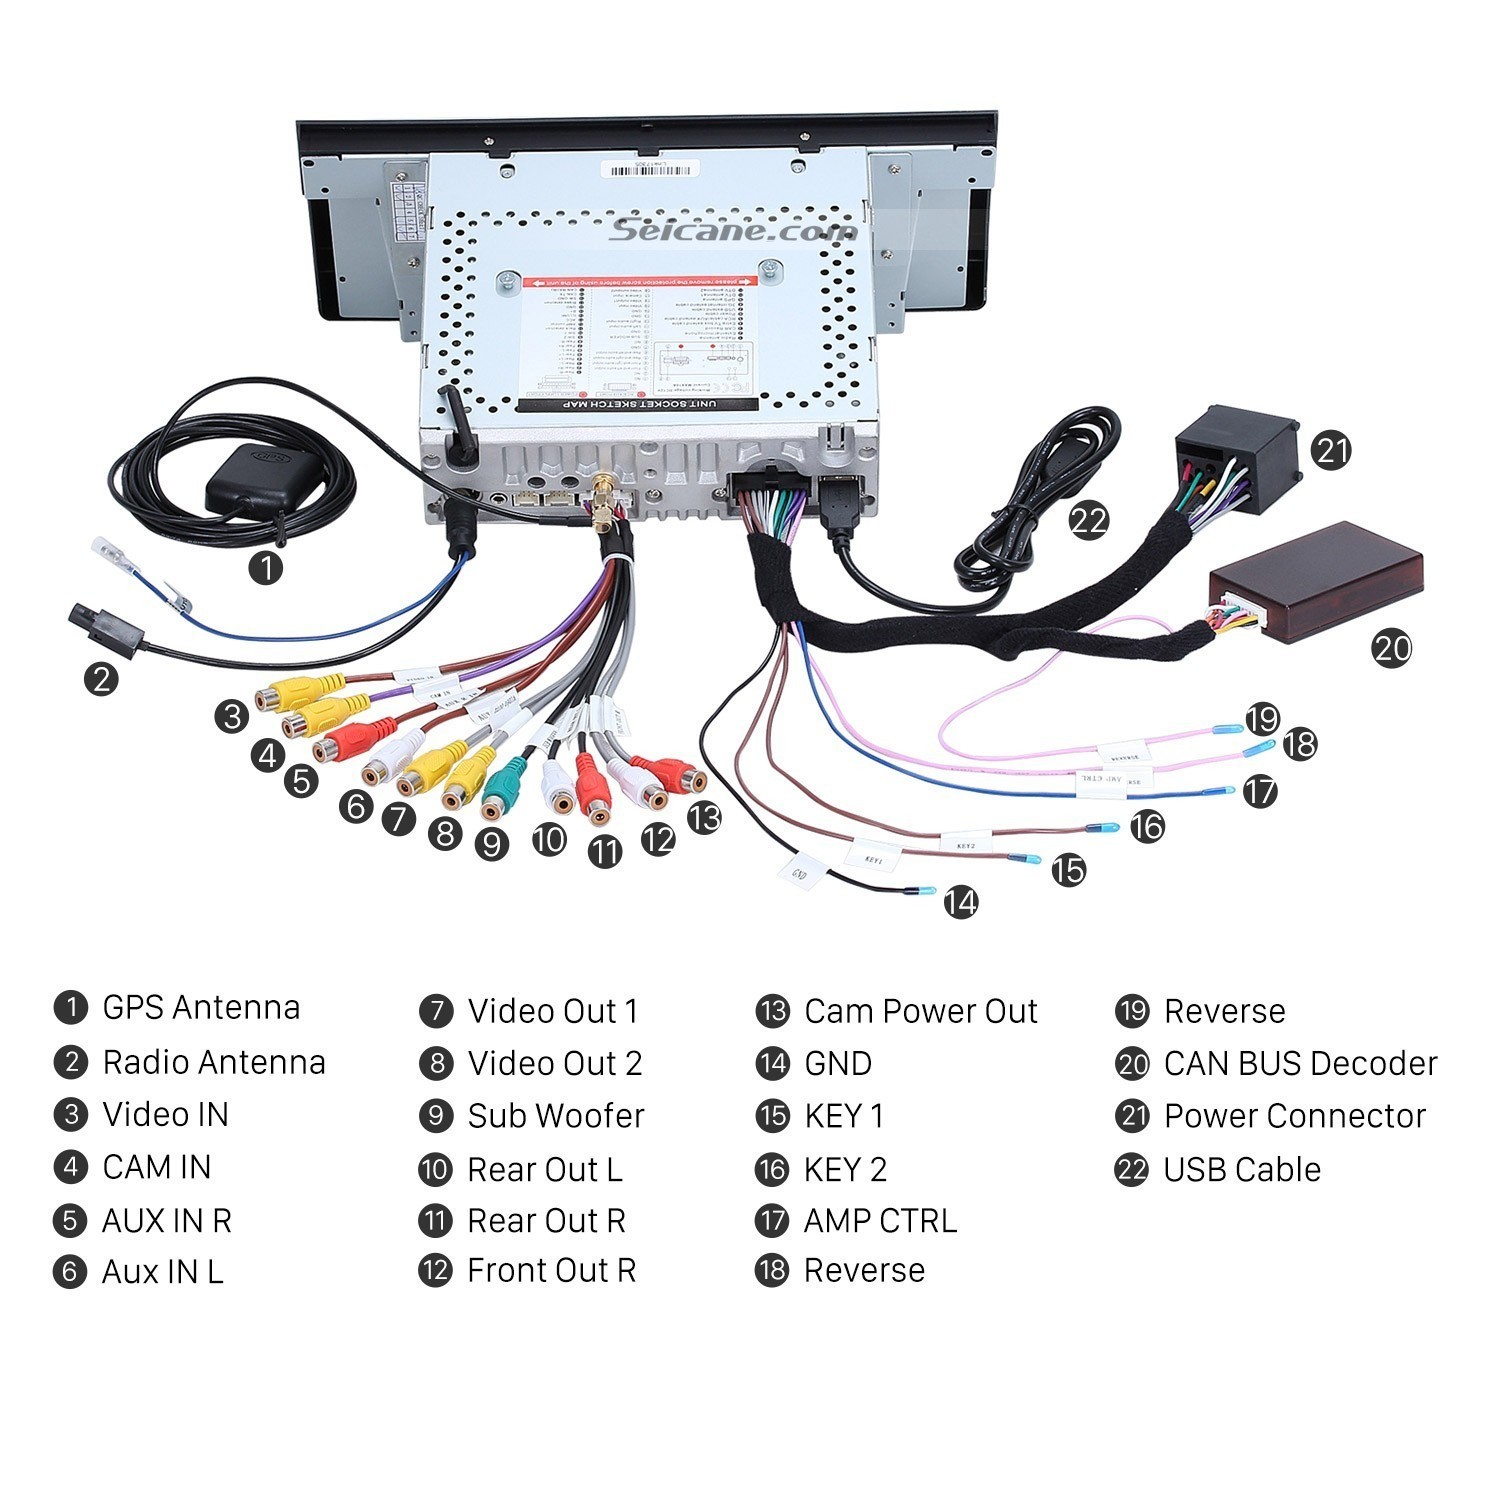 Car sound System Wiring Diagram Amp Wiring Diagram Car Download Of Car sound System Wiring Diagram